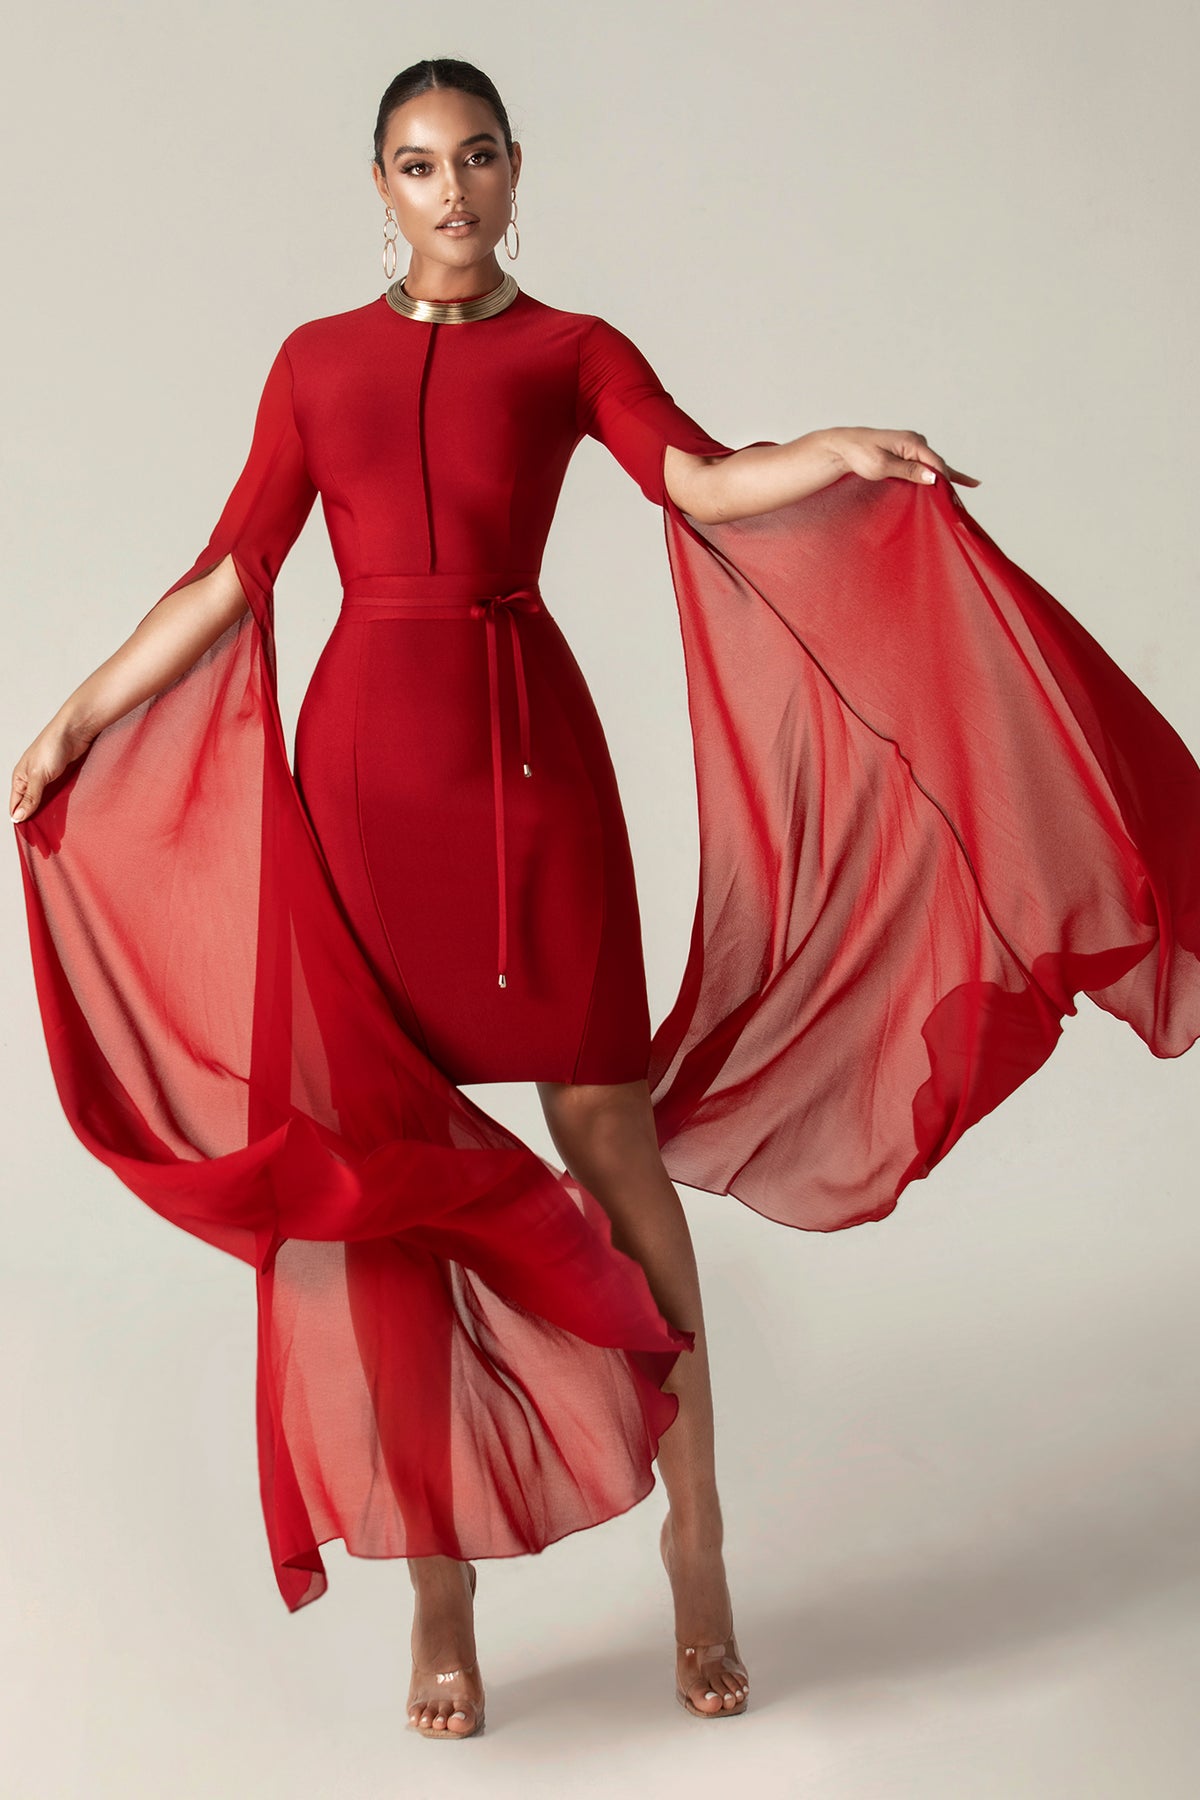 Alieva shiva women modern maroon bandage dress